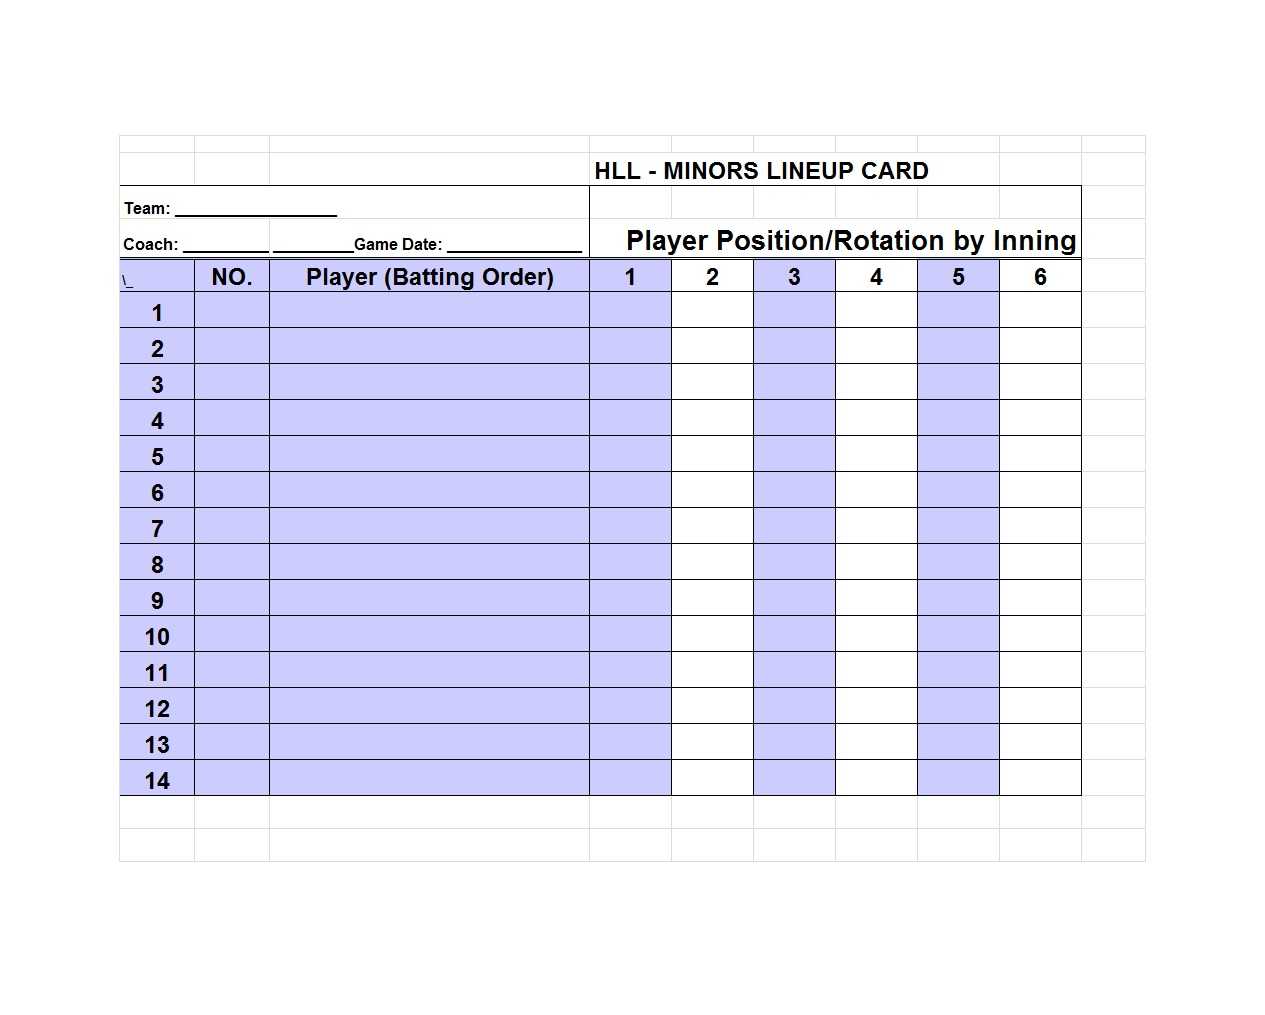 33 Printable Baseball Lineup Templates [Free Download] ᐅ Intended For Baseball Lineup Card Template